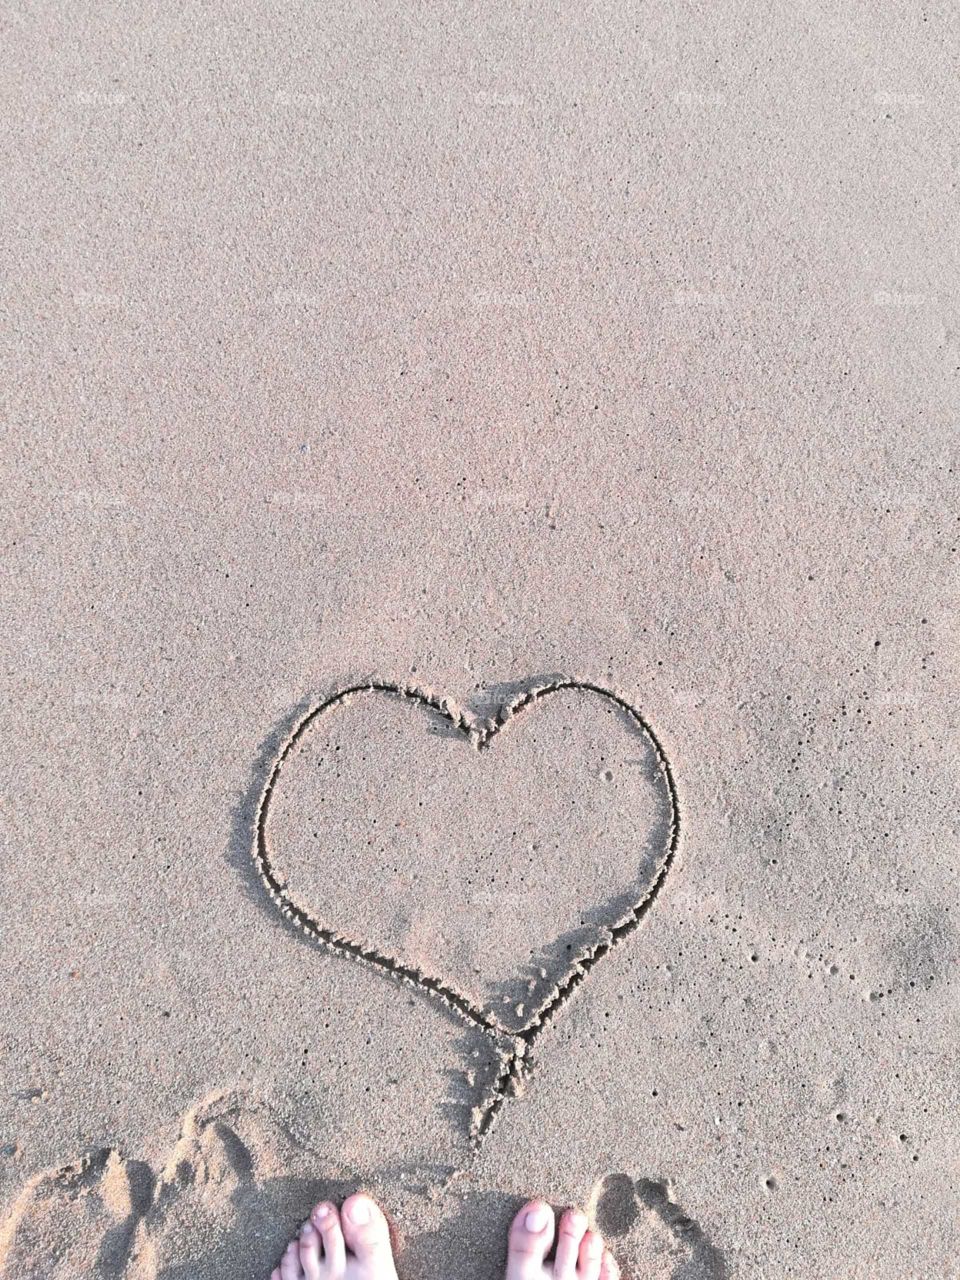 Heart drawn on sandy beach